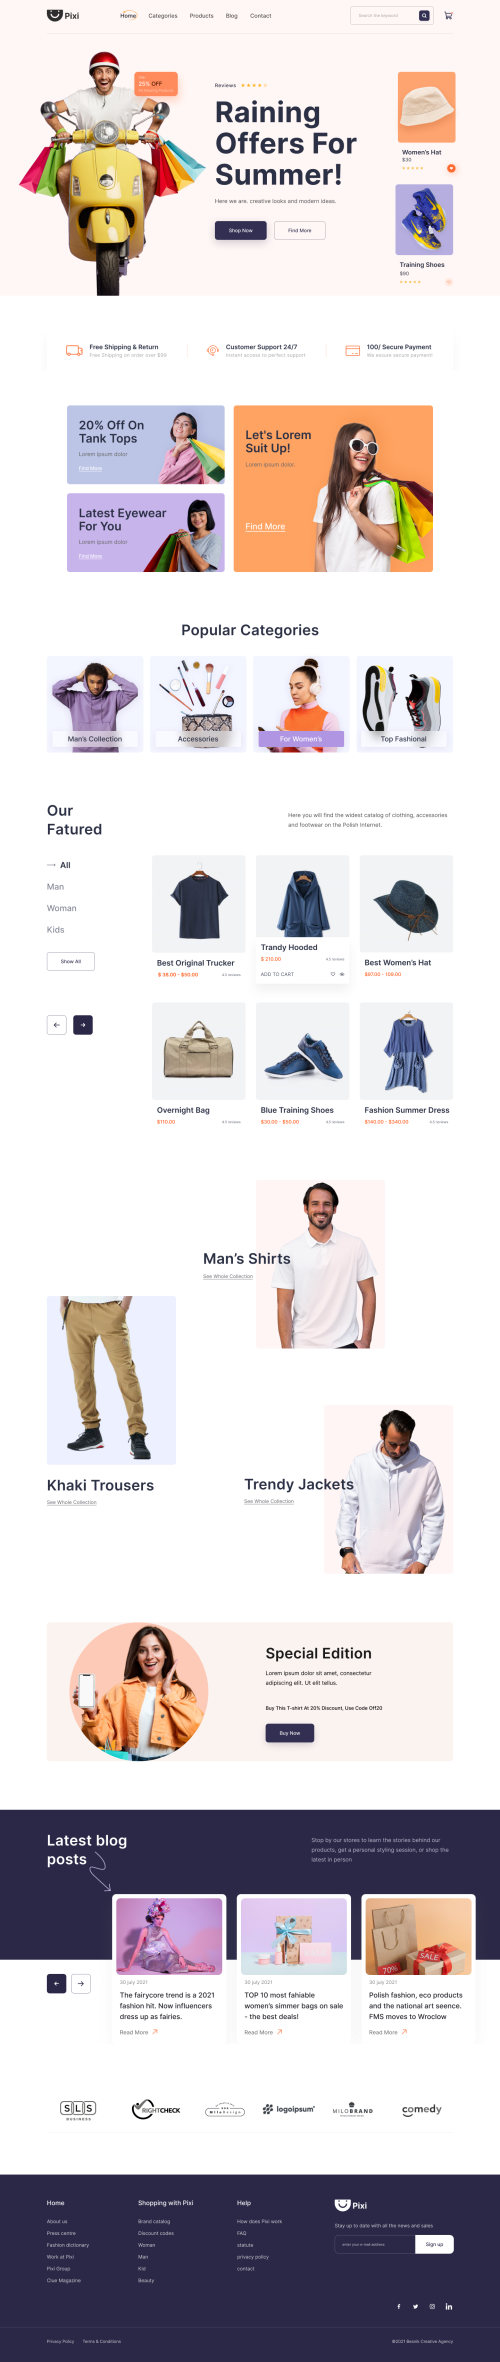 UIHut - Pixi Online Shopping Website - 12146